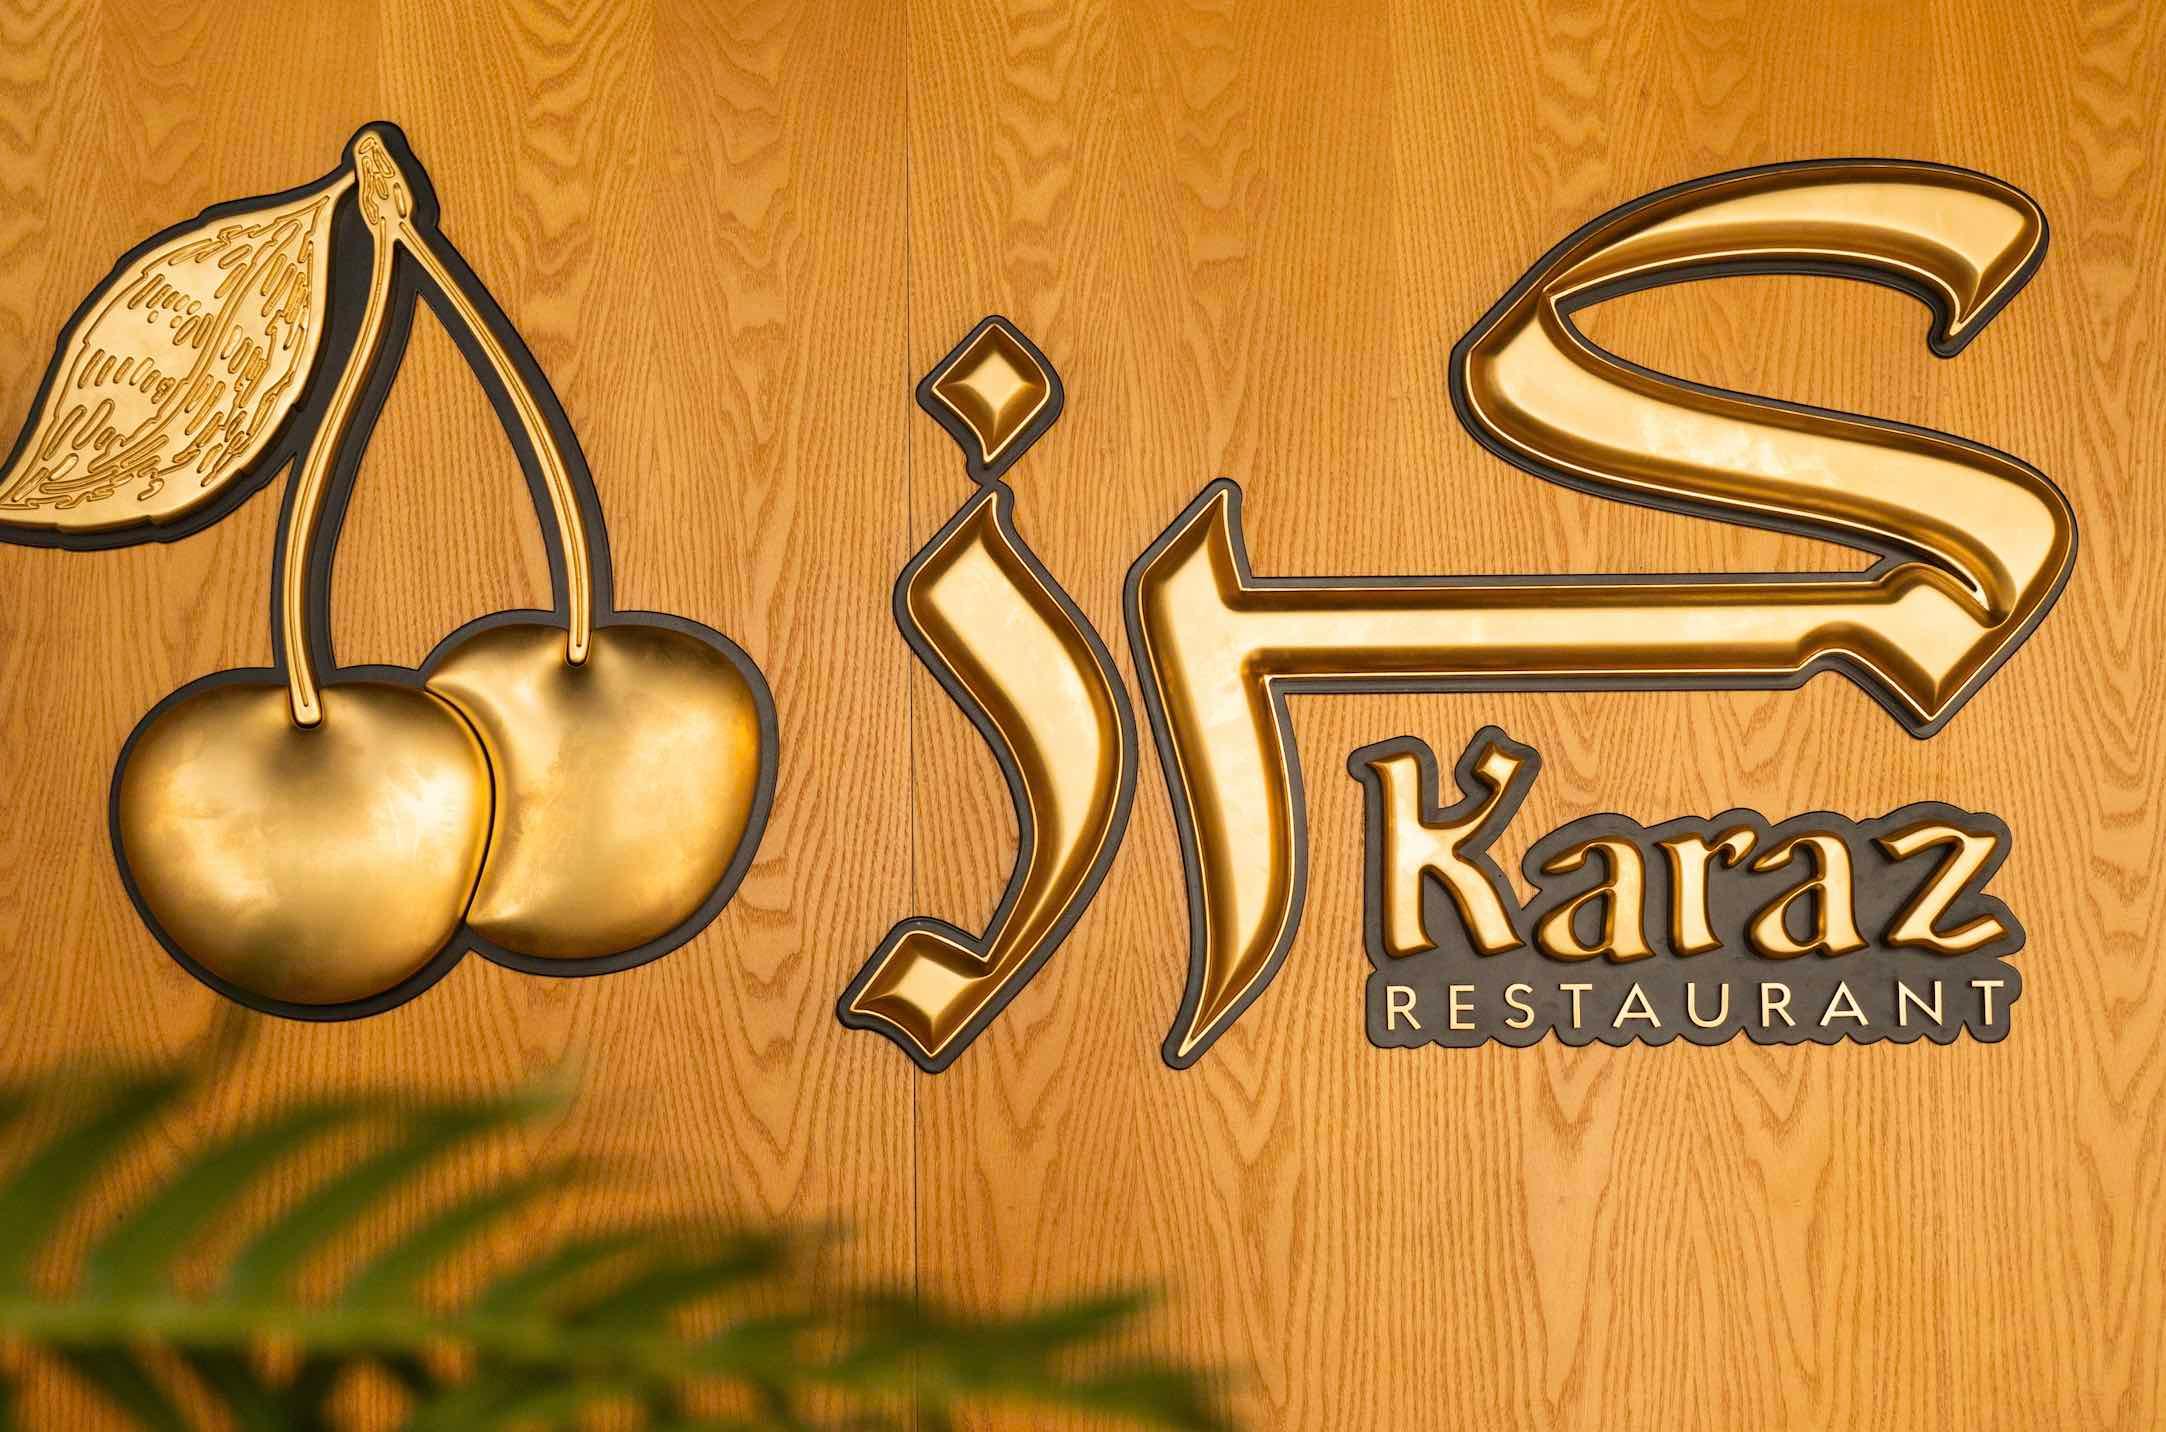 Karaz: A new Levantine restaurant set to open in Abu Dhabi